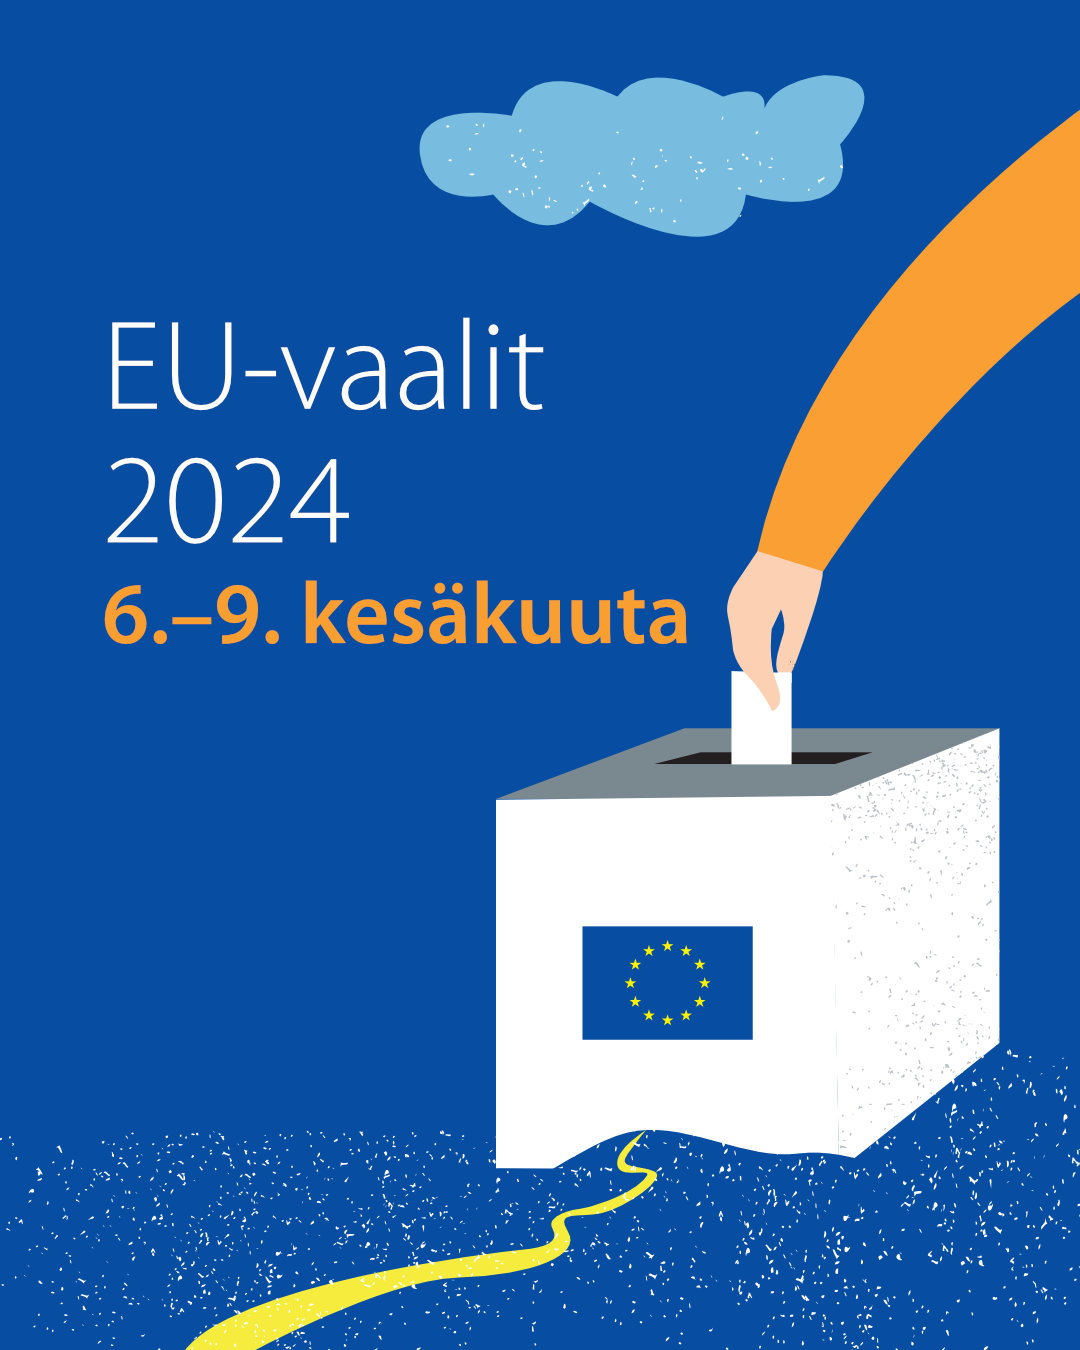 EU-vaalit 2024 - 4:5